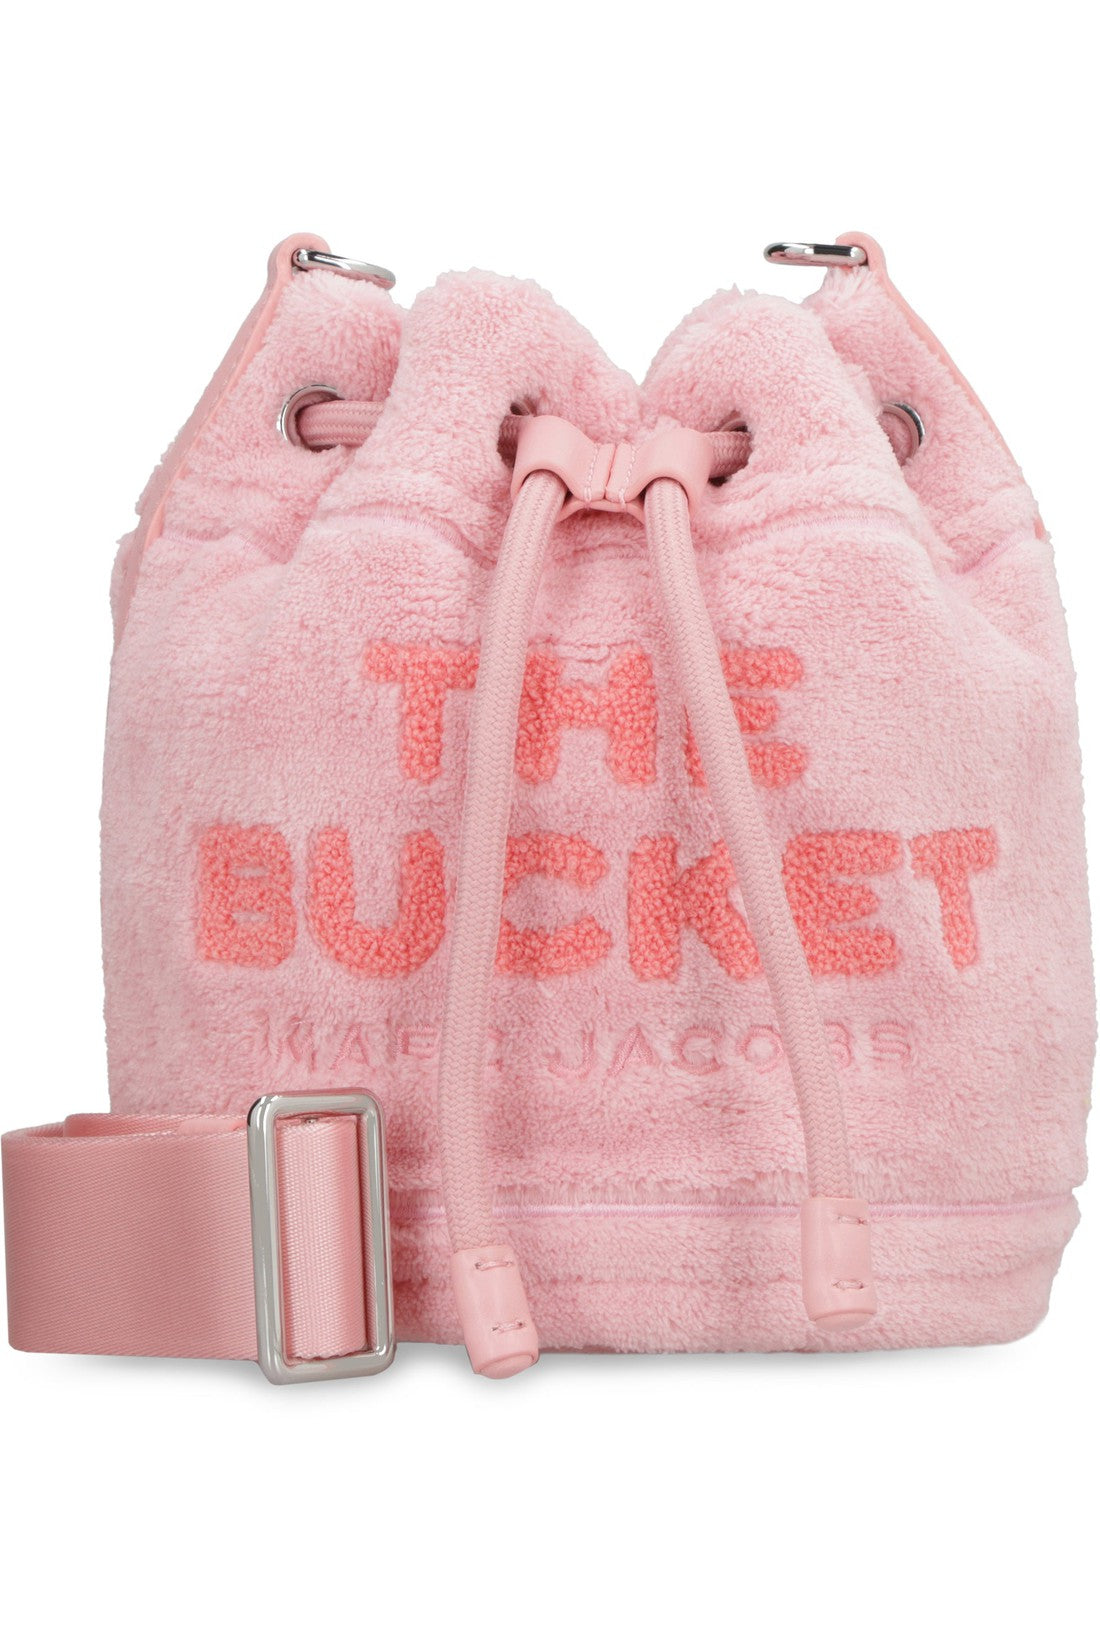 Marc Jacobs-OUTLET-SALE-The Terry Bucket Bag-ARCHIVIST